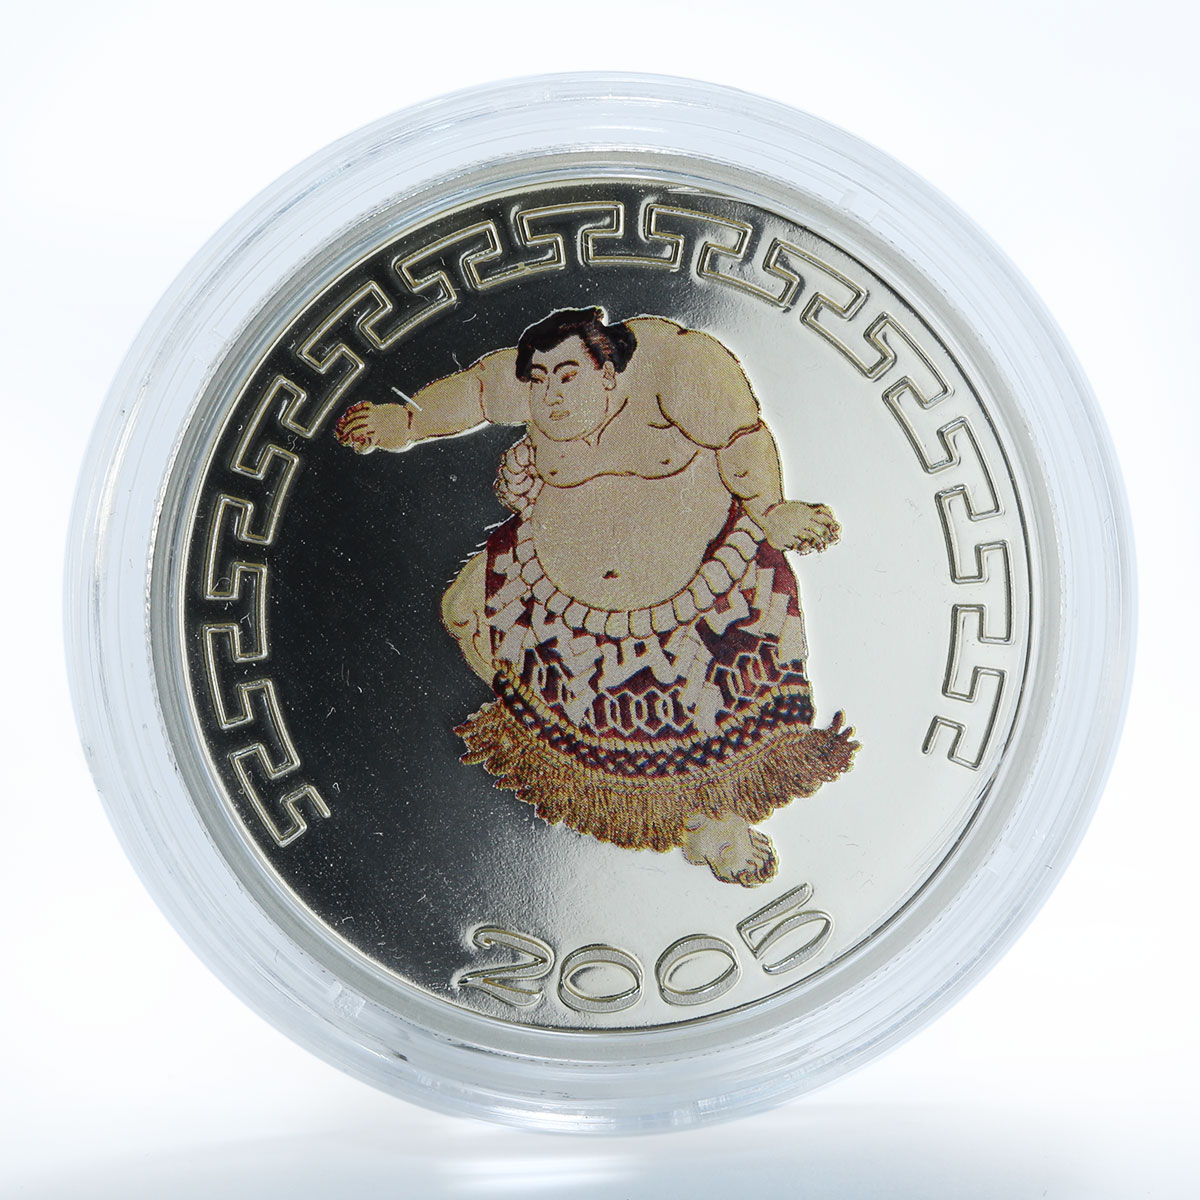 Mongolia 500 tugriks Japanese Sumo Wrestling Ounomatsu №2 silver coin 2005